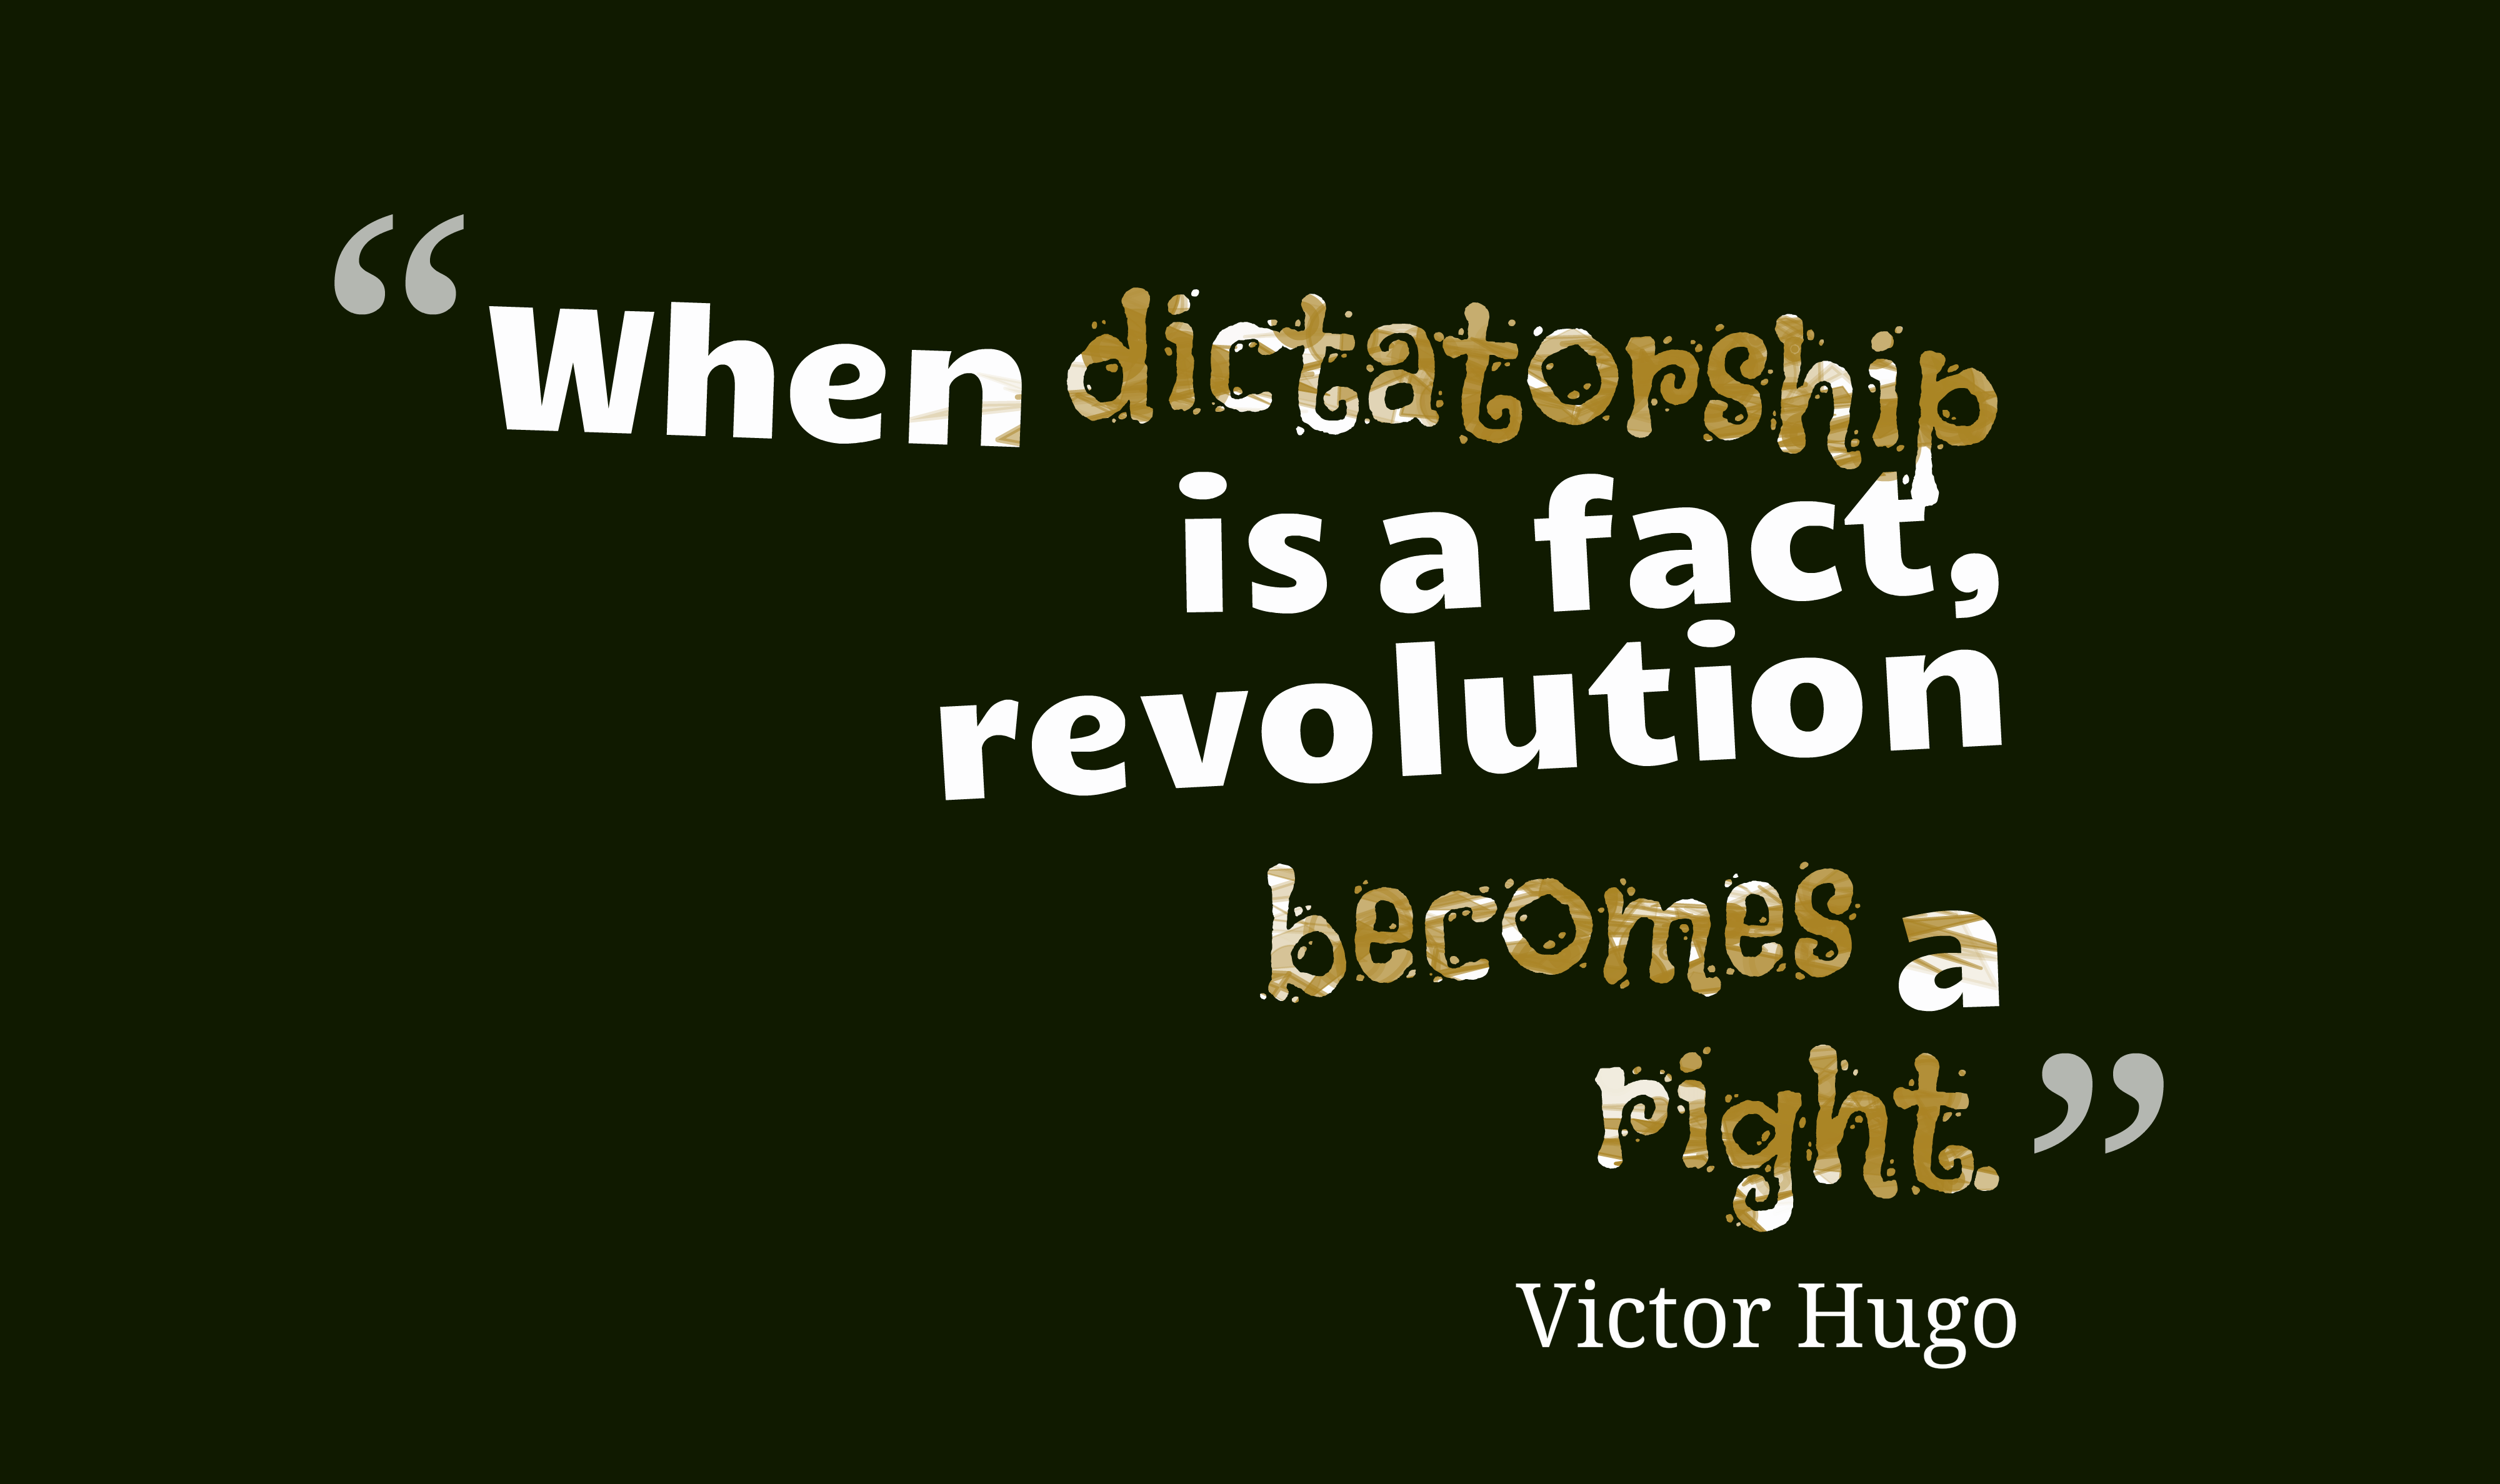 Victor Hugo Beautiful Quote HD Image